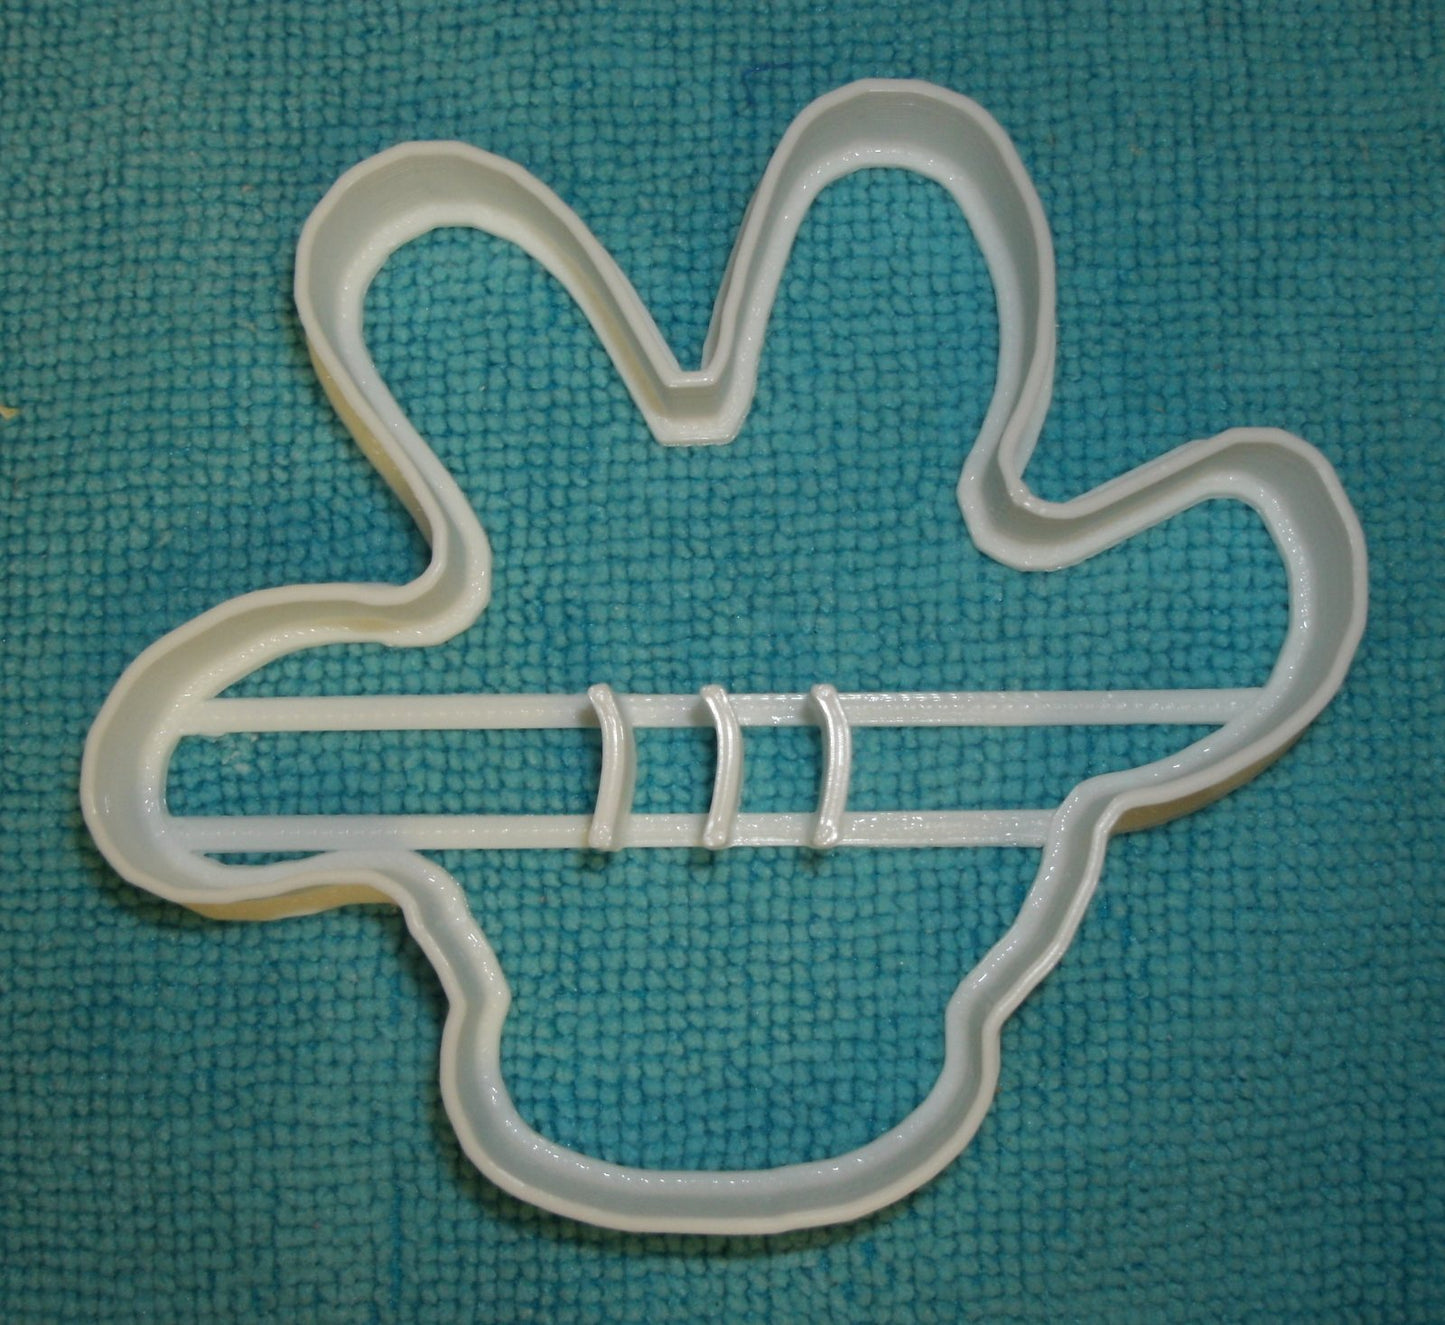 6x Mickey Mouse Glove Fondant Cutter Cupcake Topper Size 1.75" USA FD471